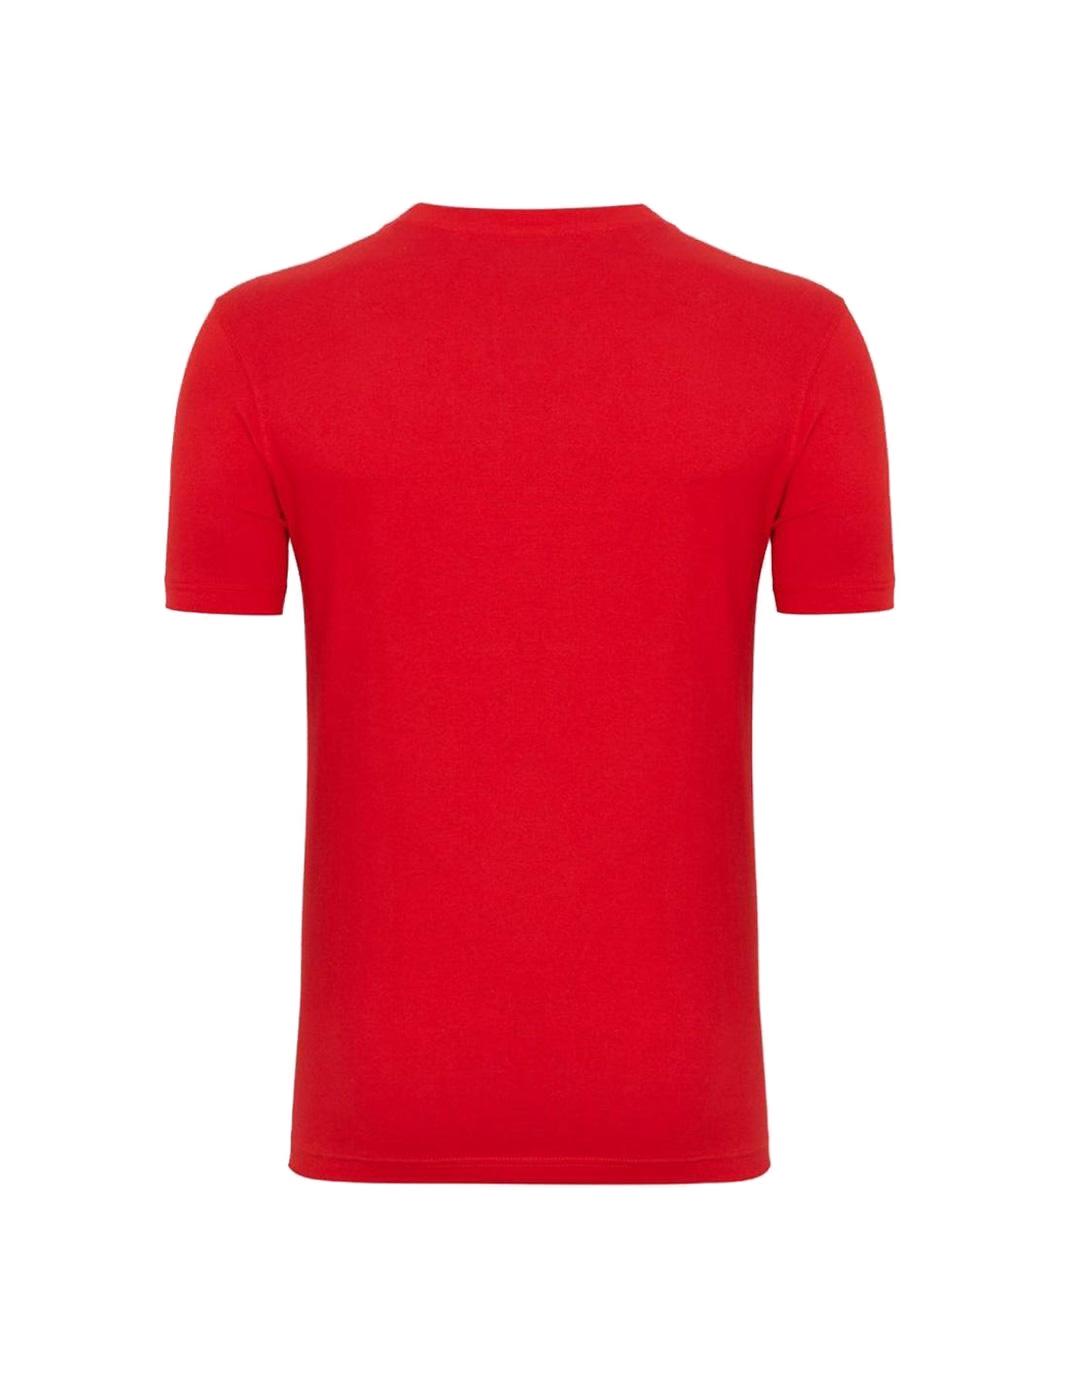 Camiseta básica Lacoste roja para hombre- z